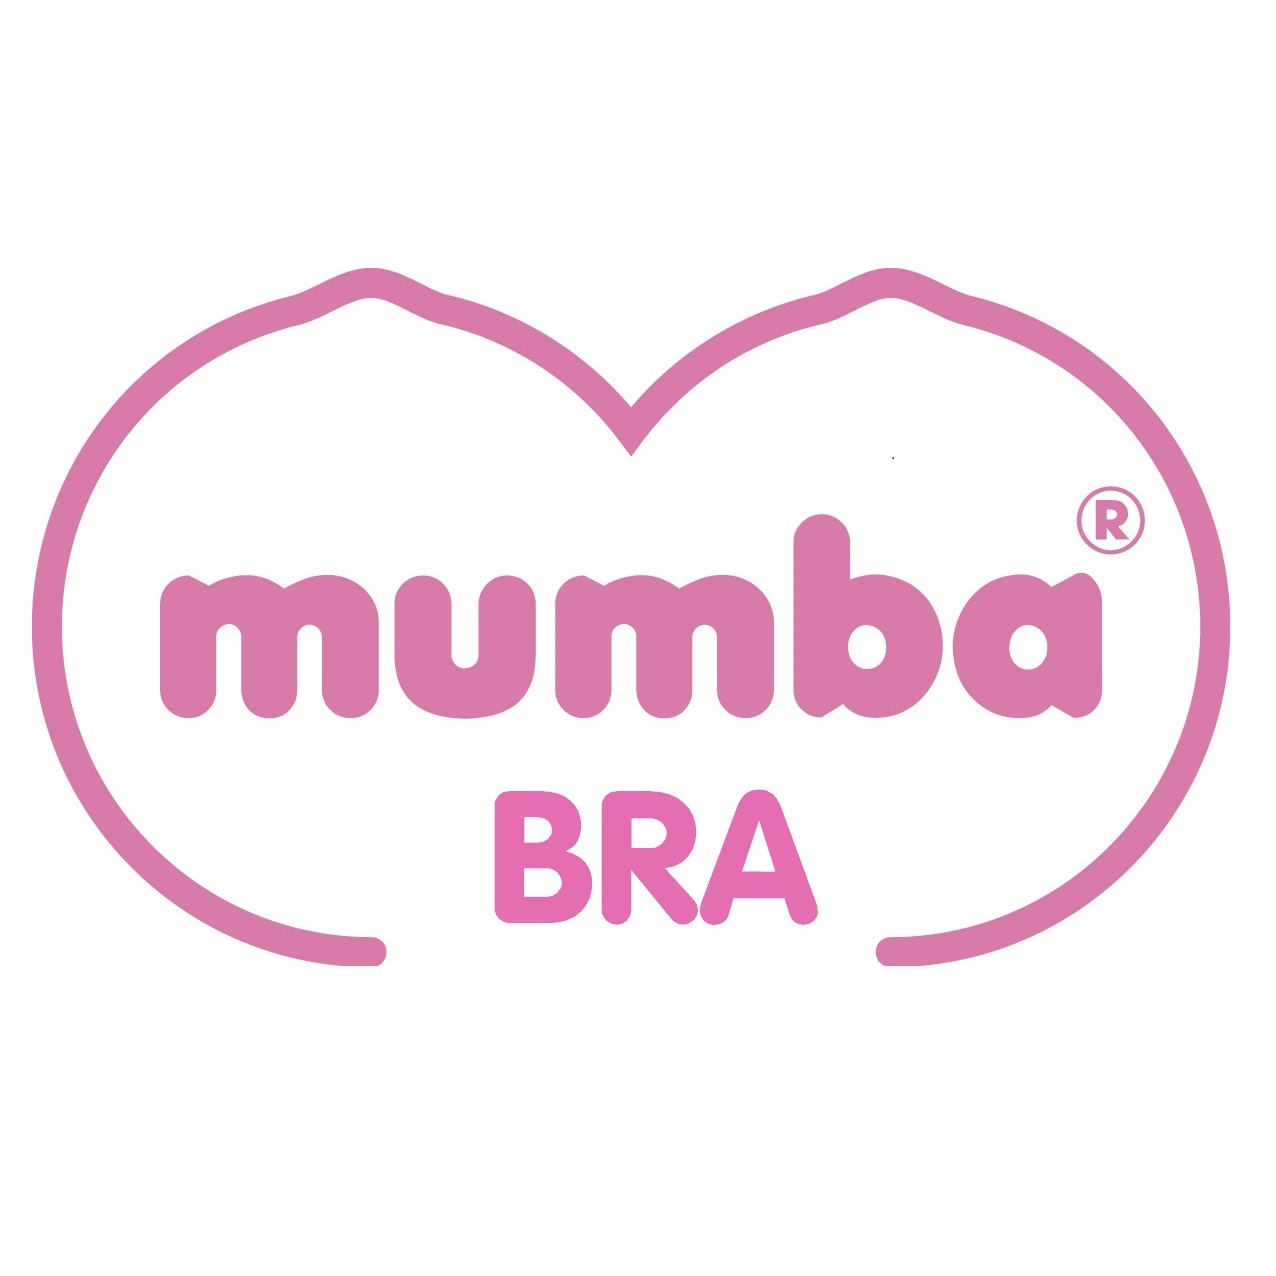 Mumba Bra - Maya Freedom Bra - Pregnancy, Breastfeeding Bra with